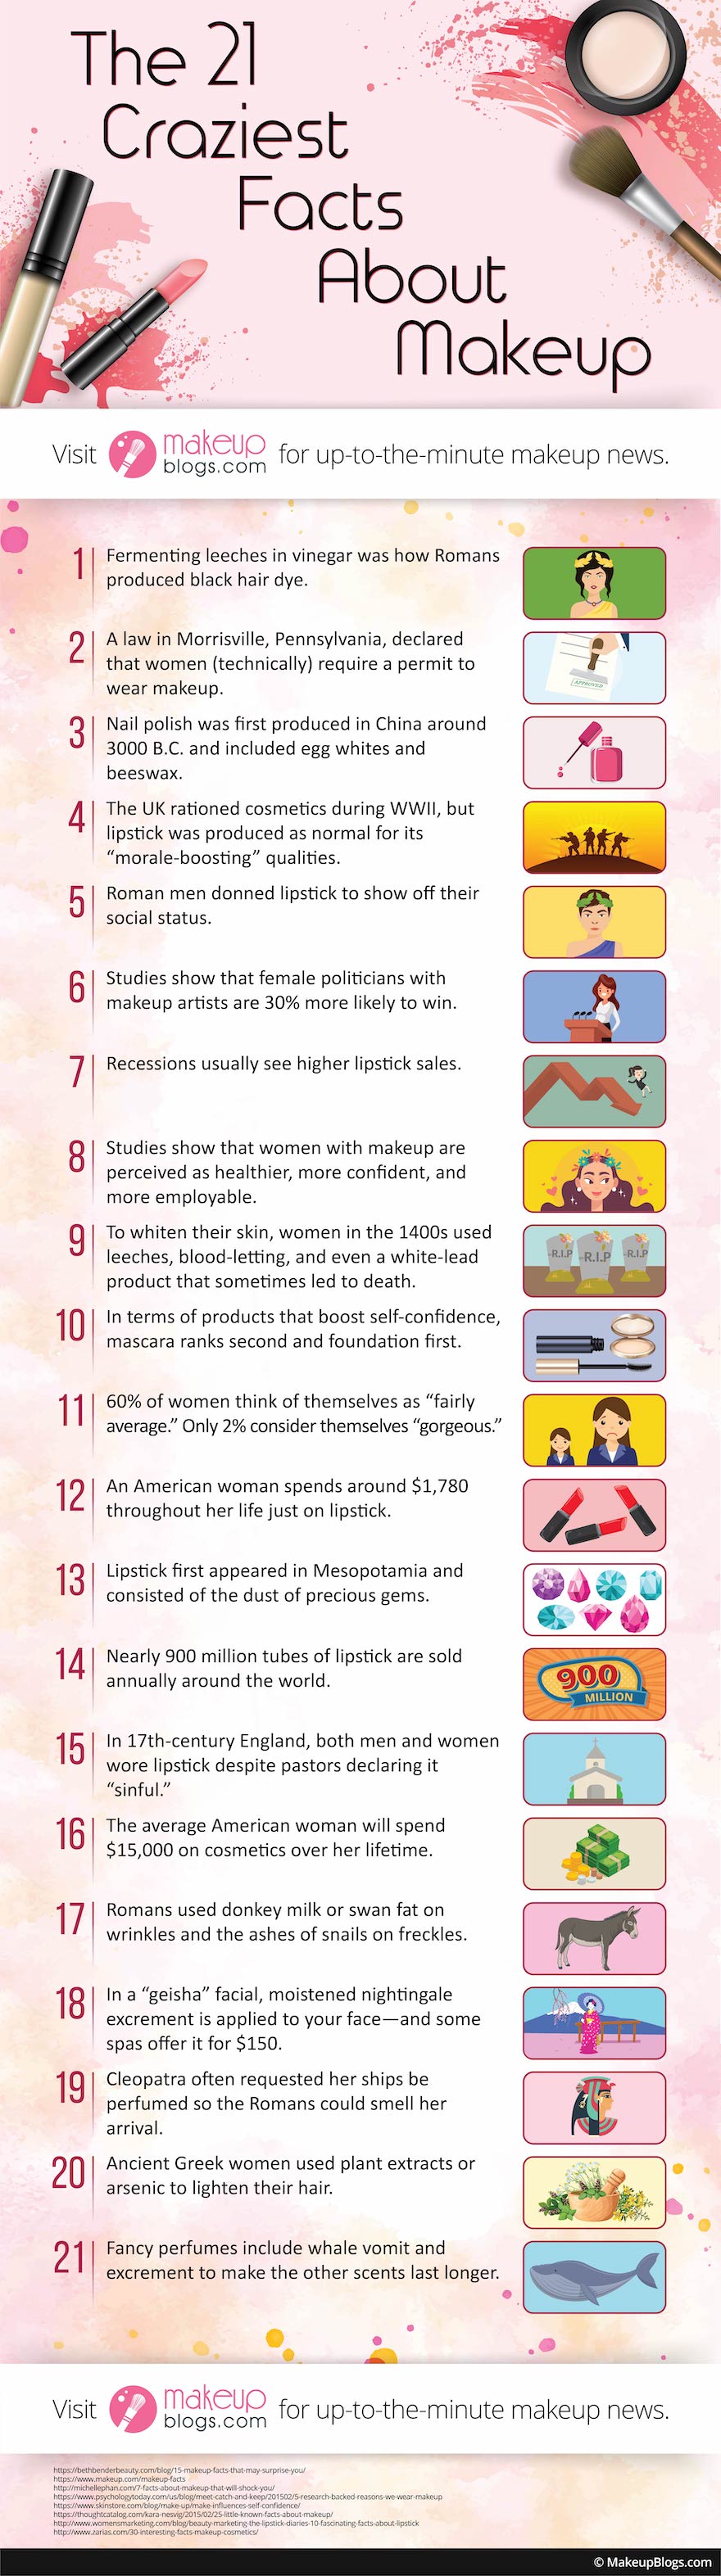 The 21 Craziest Facts About Makeup by makeupblogs.com